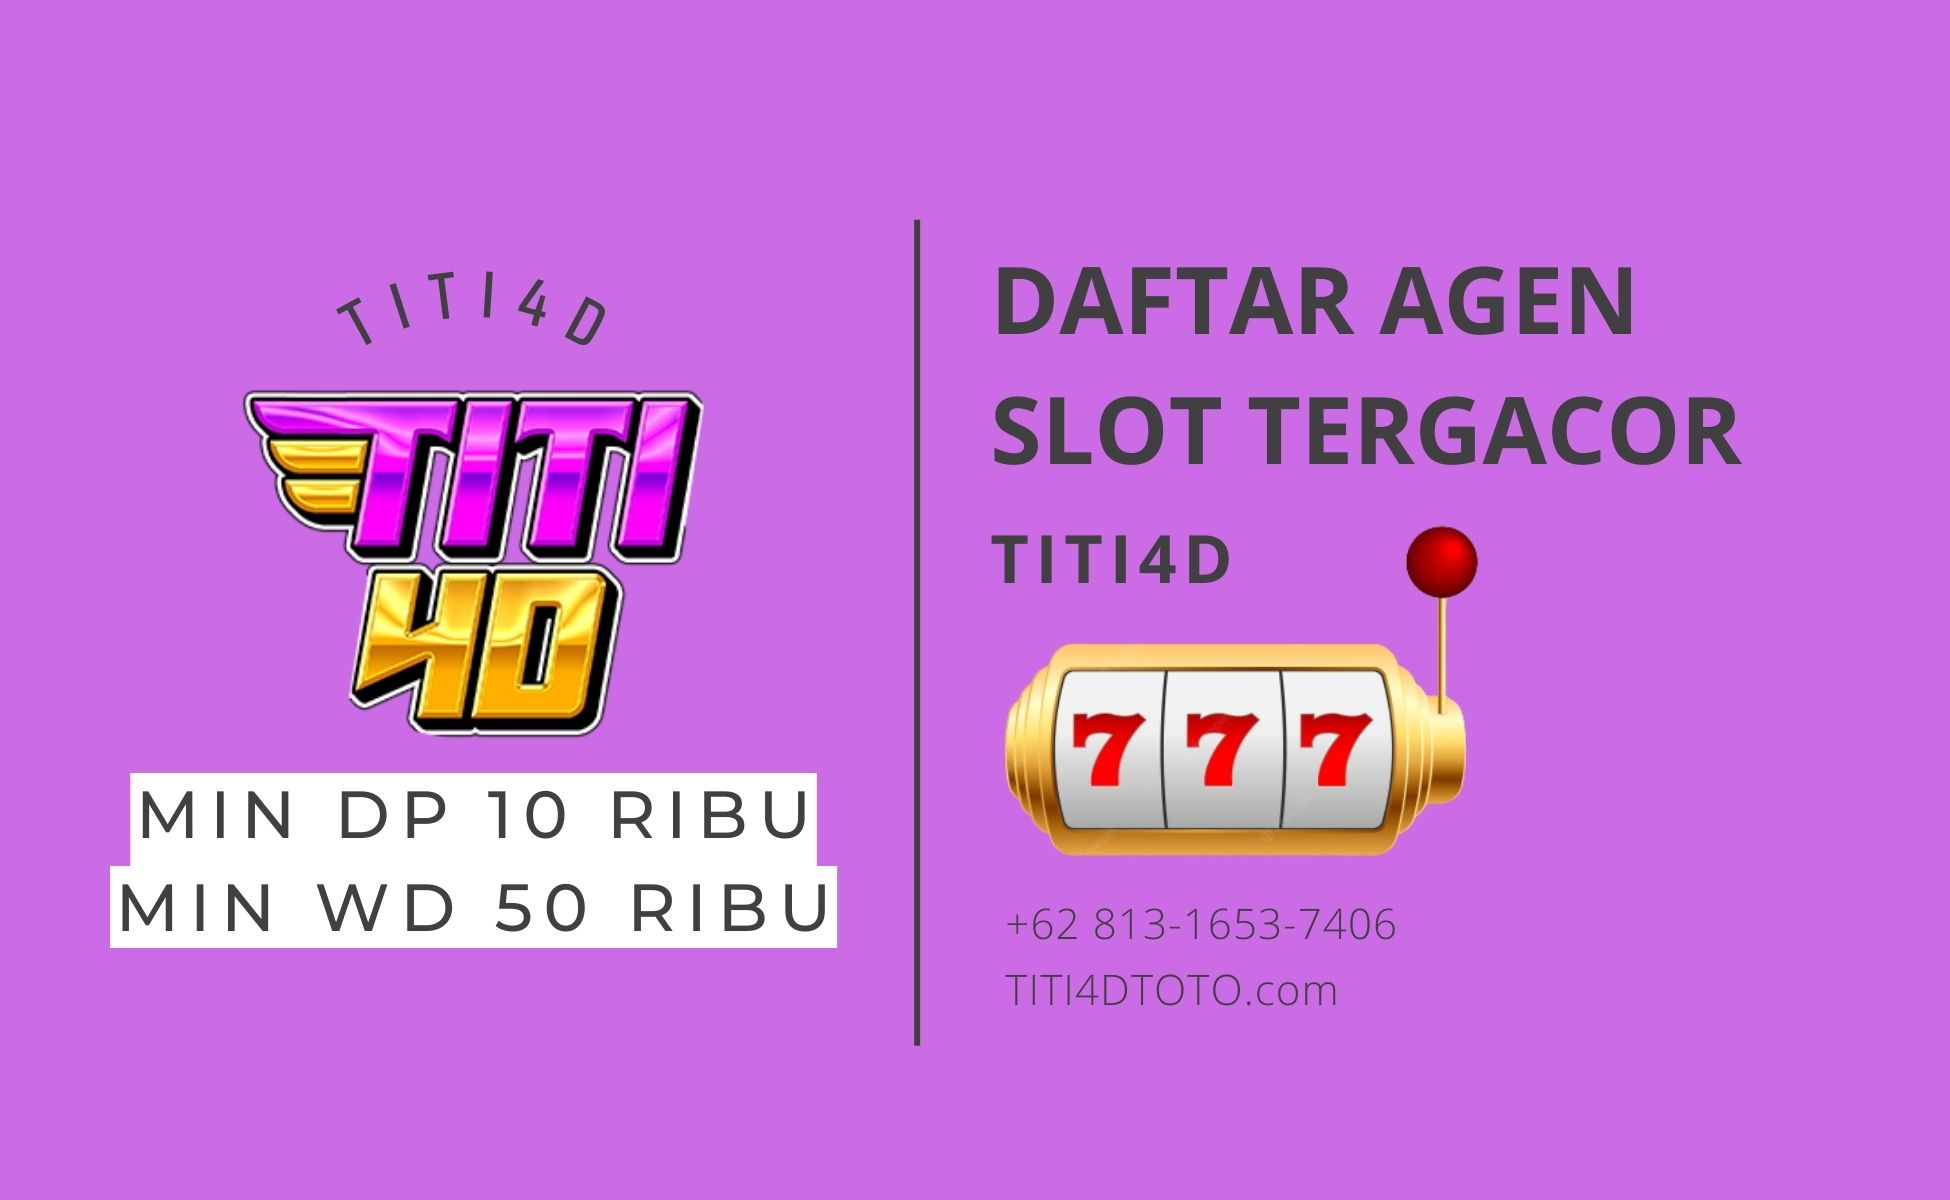 Daftar Agen Slot Tergacor TITI4D